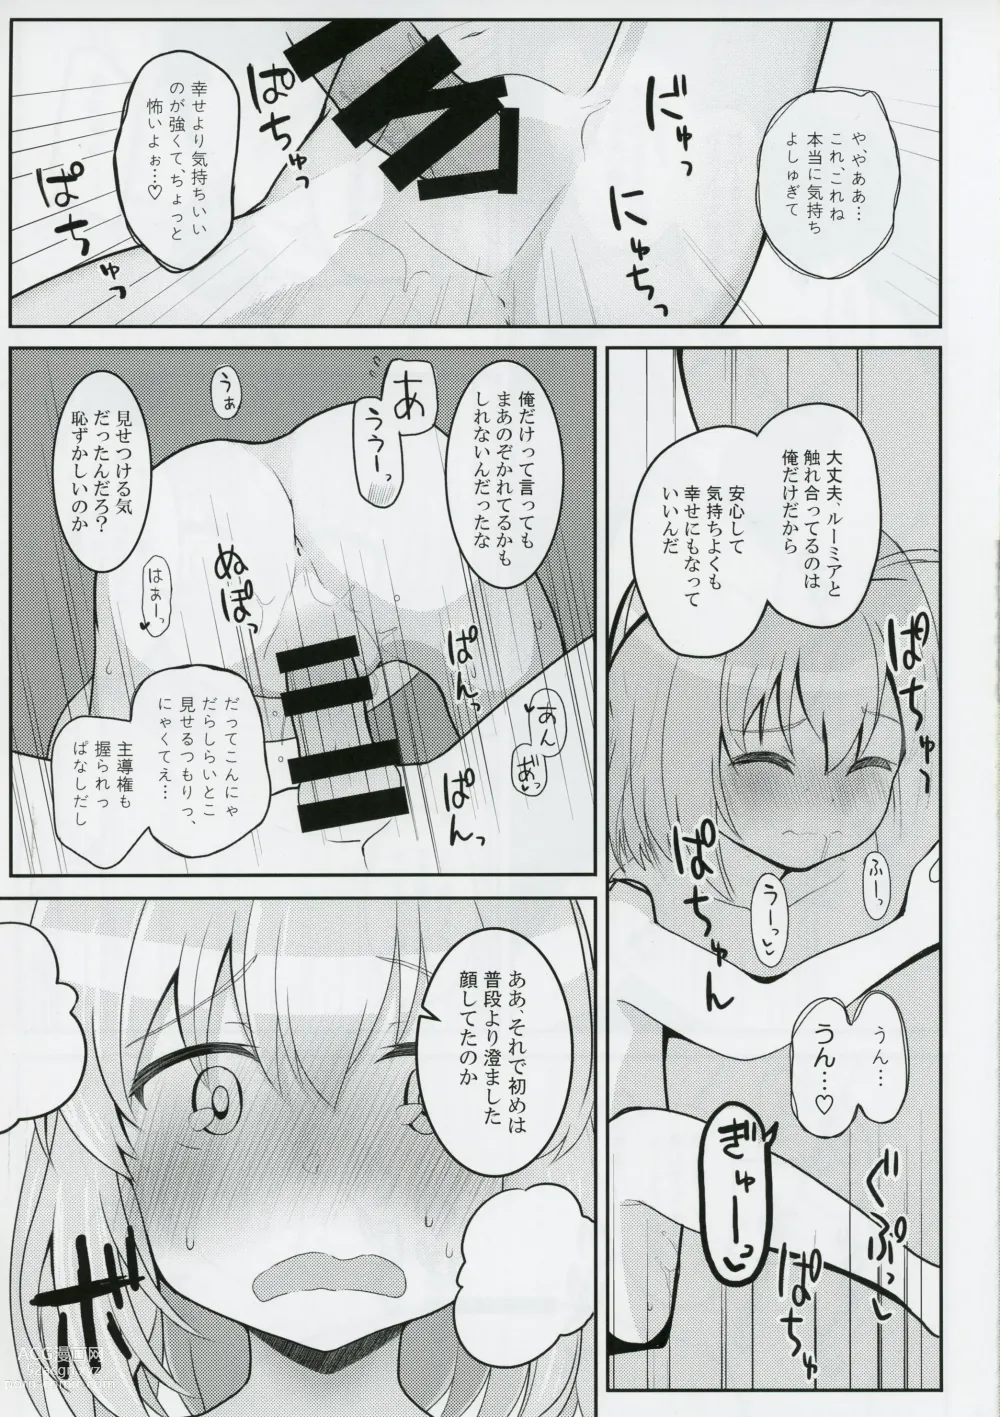 Page 16 of doujinshi 2019-07-17,  Gensoukyou nite, Kimi to